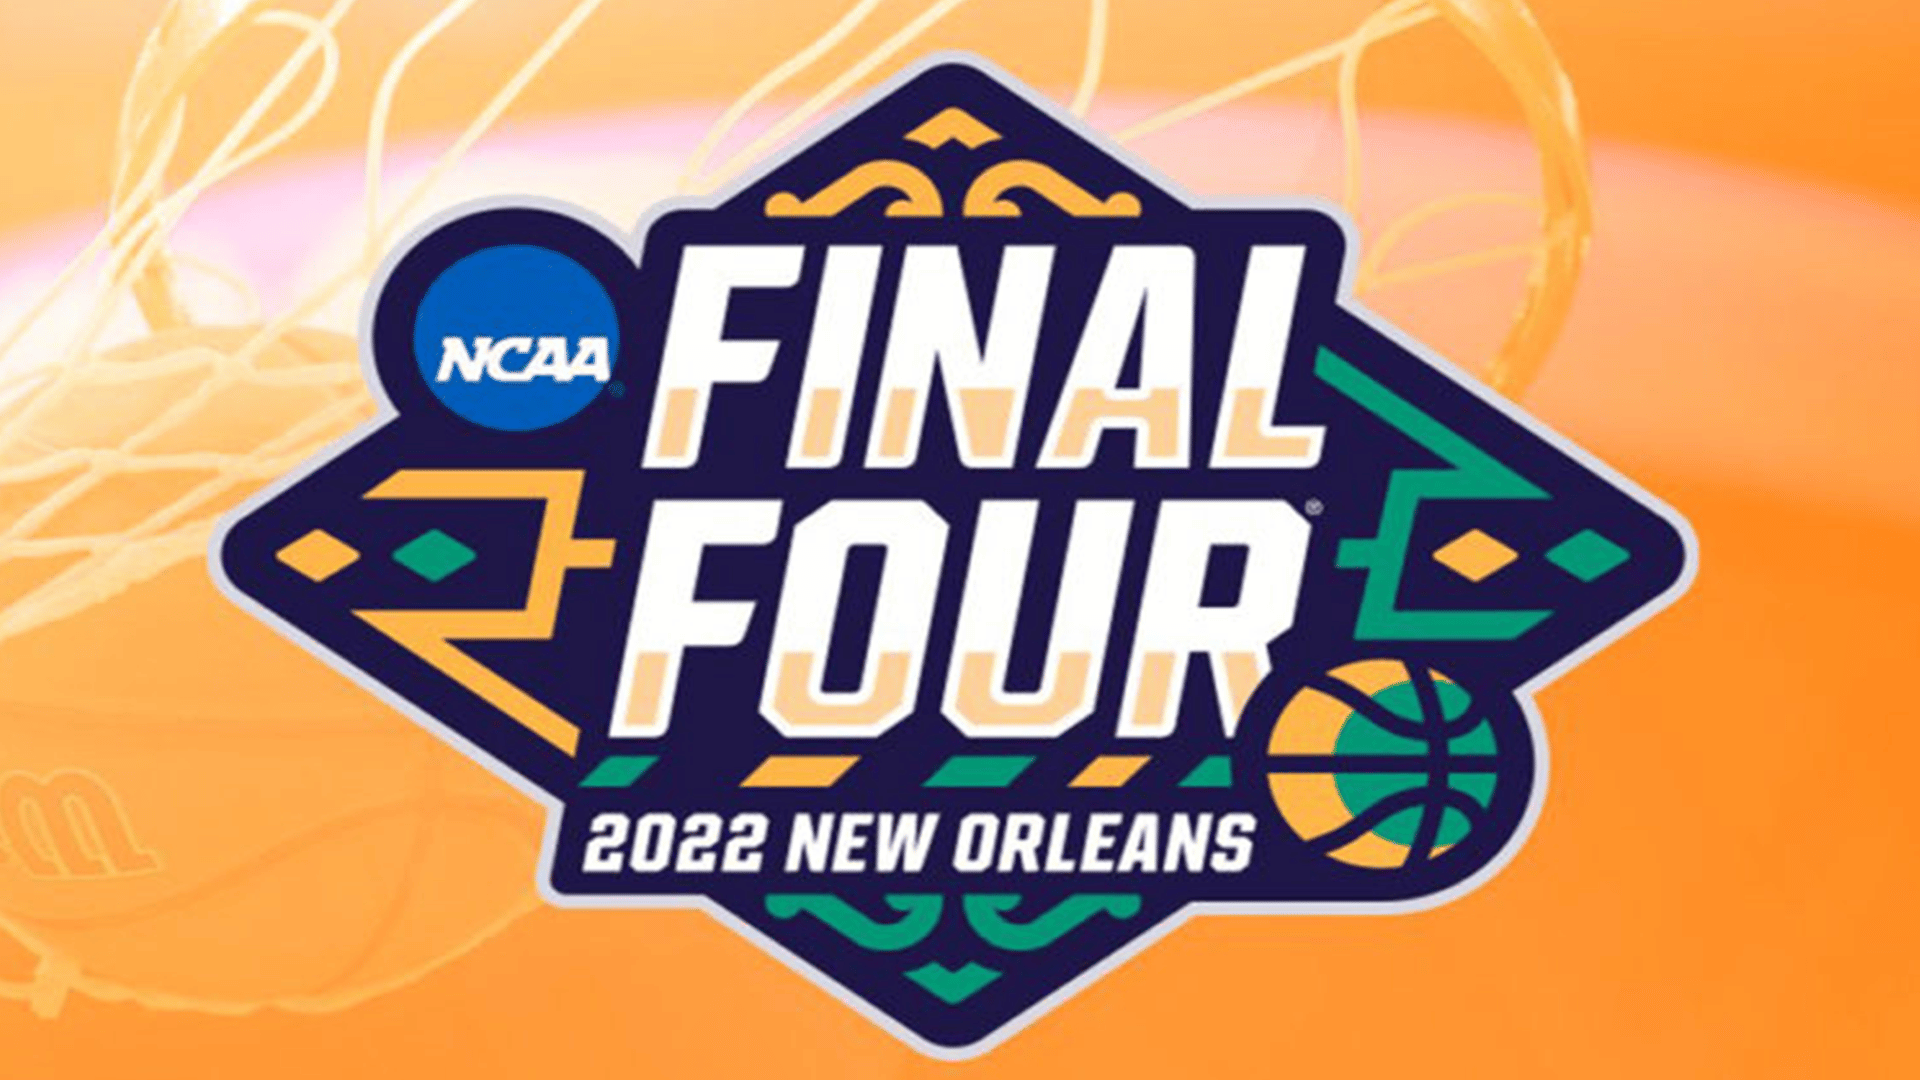 NCAA Final Four Image